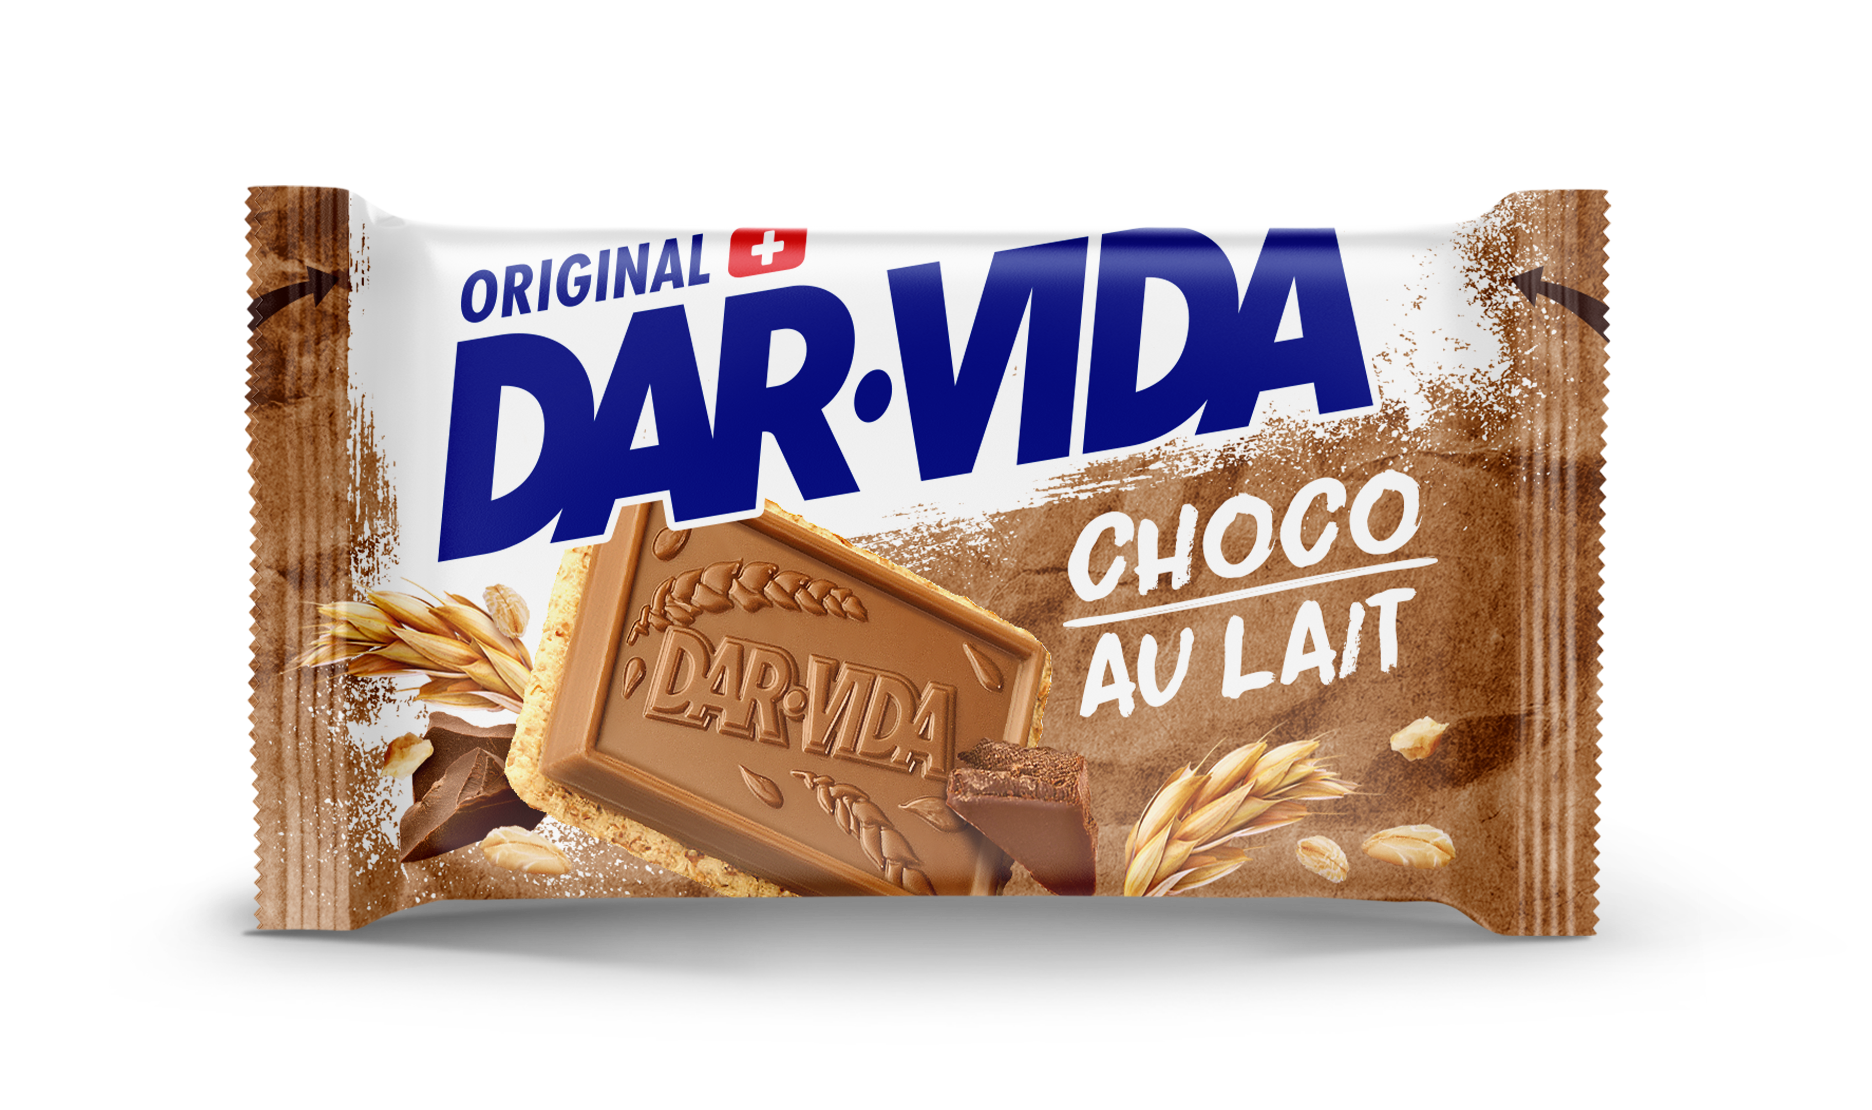 DAR-VIDA classic Choco au lait